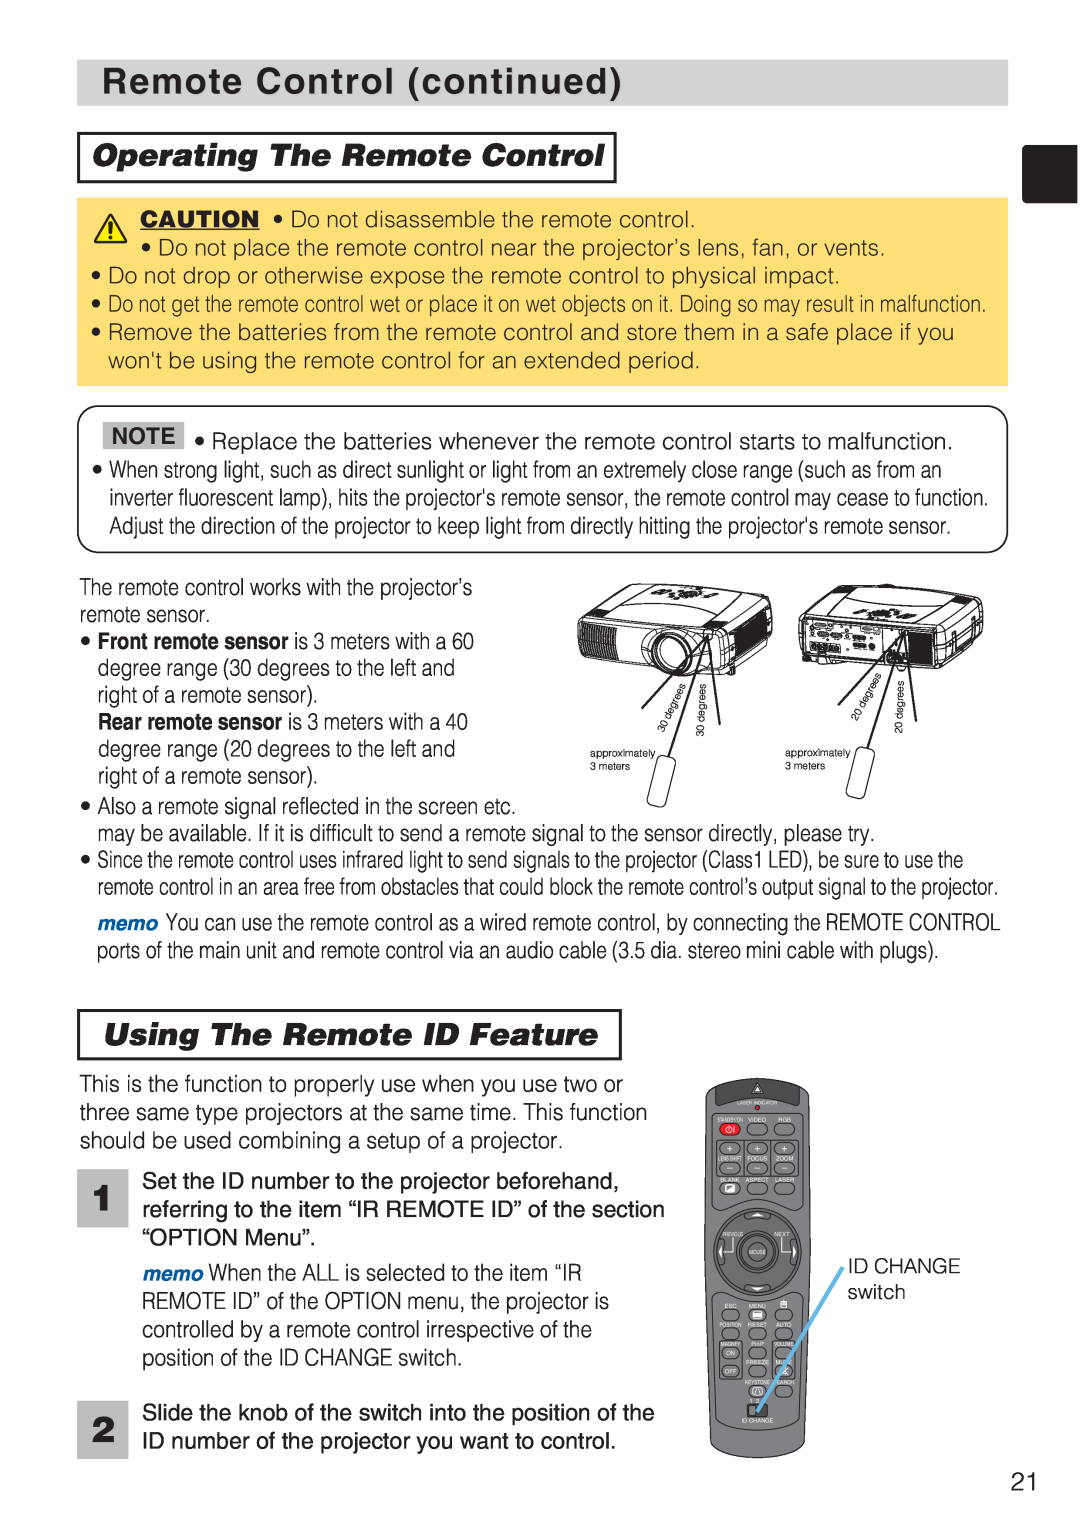 Toshiba TLP-SX3500 user manual Remote Control continued, Operating The Remote Control, Using The Remote ID Feature 